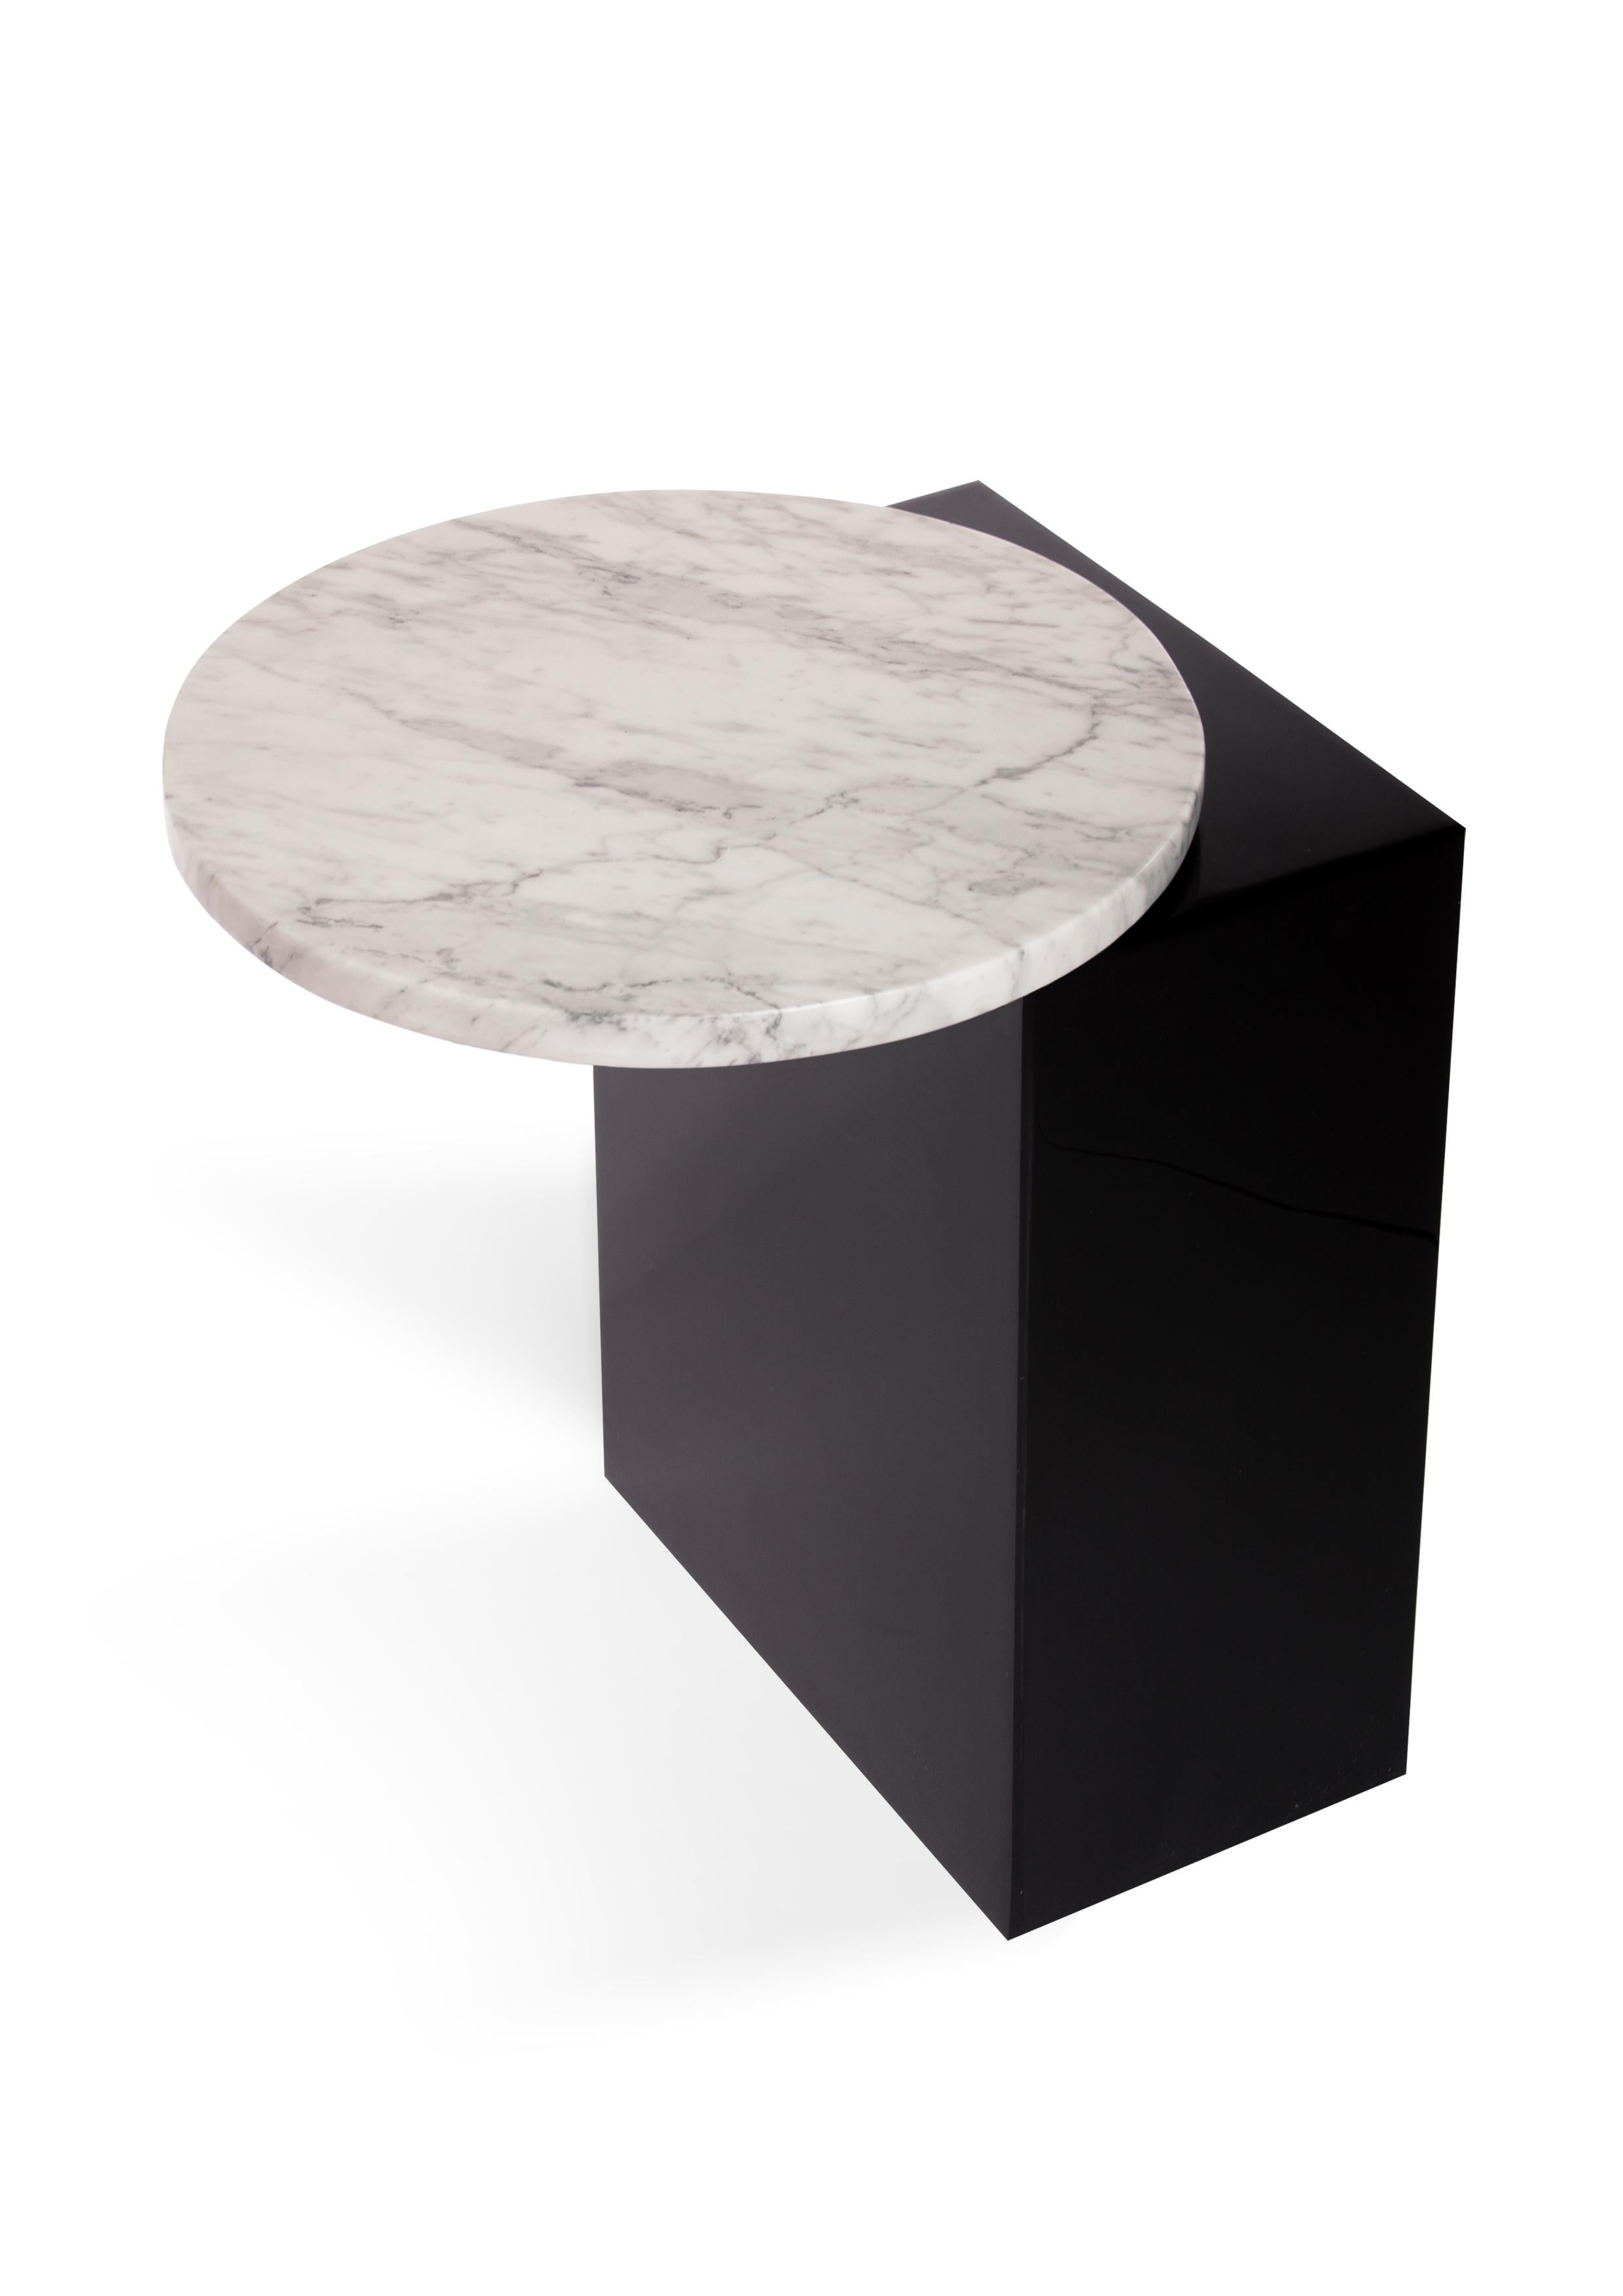 Organic Modern Configurable Geometry II Side Table by Sten Studio, REP by Tuleste Factory